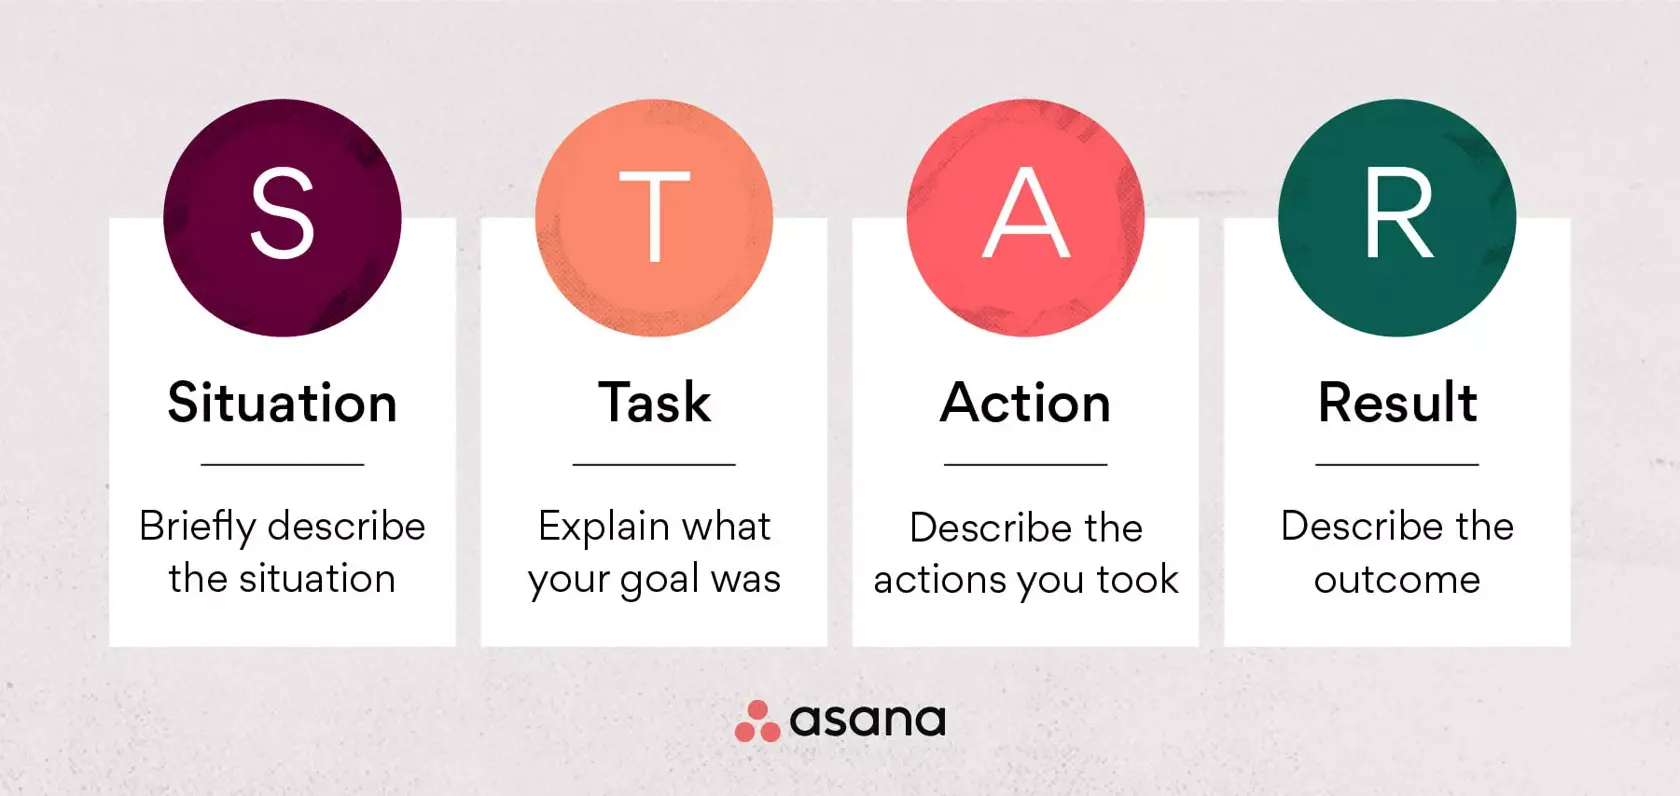 [inline illustration] STAR method: Situation, Task, Action, Result (infographic)